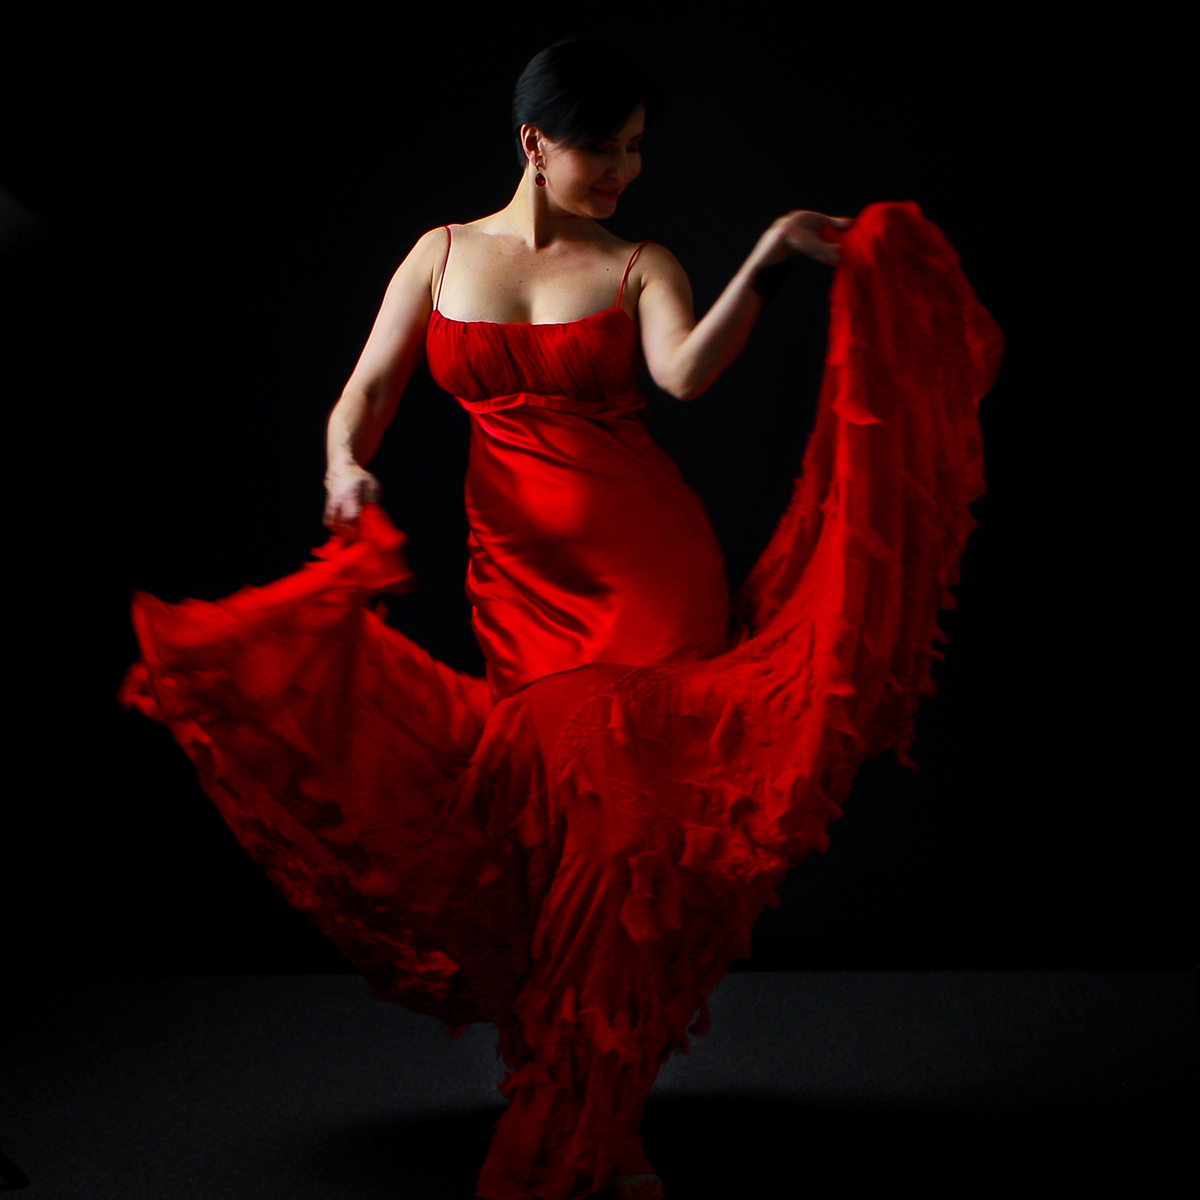 Sexy Red Dress Photoshoot - Julia Juliati - I'm Taking You With Me